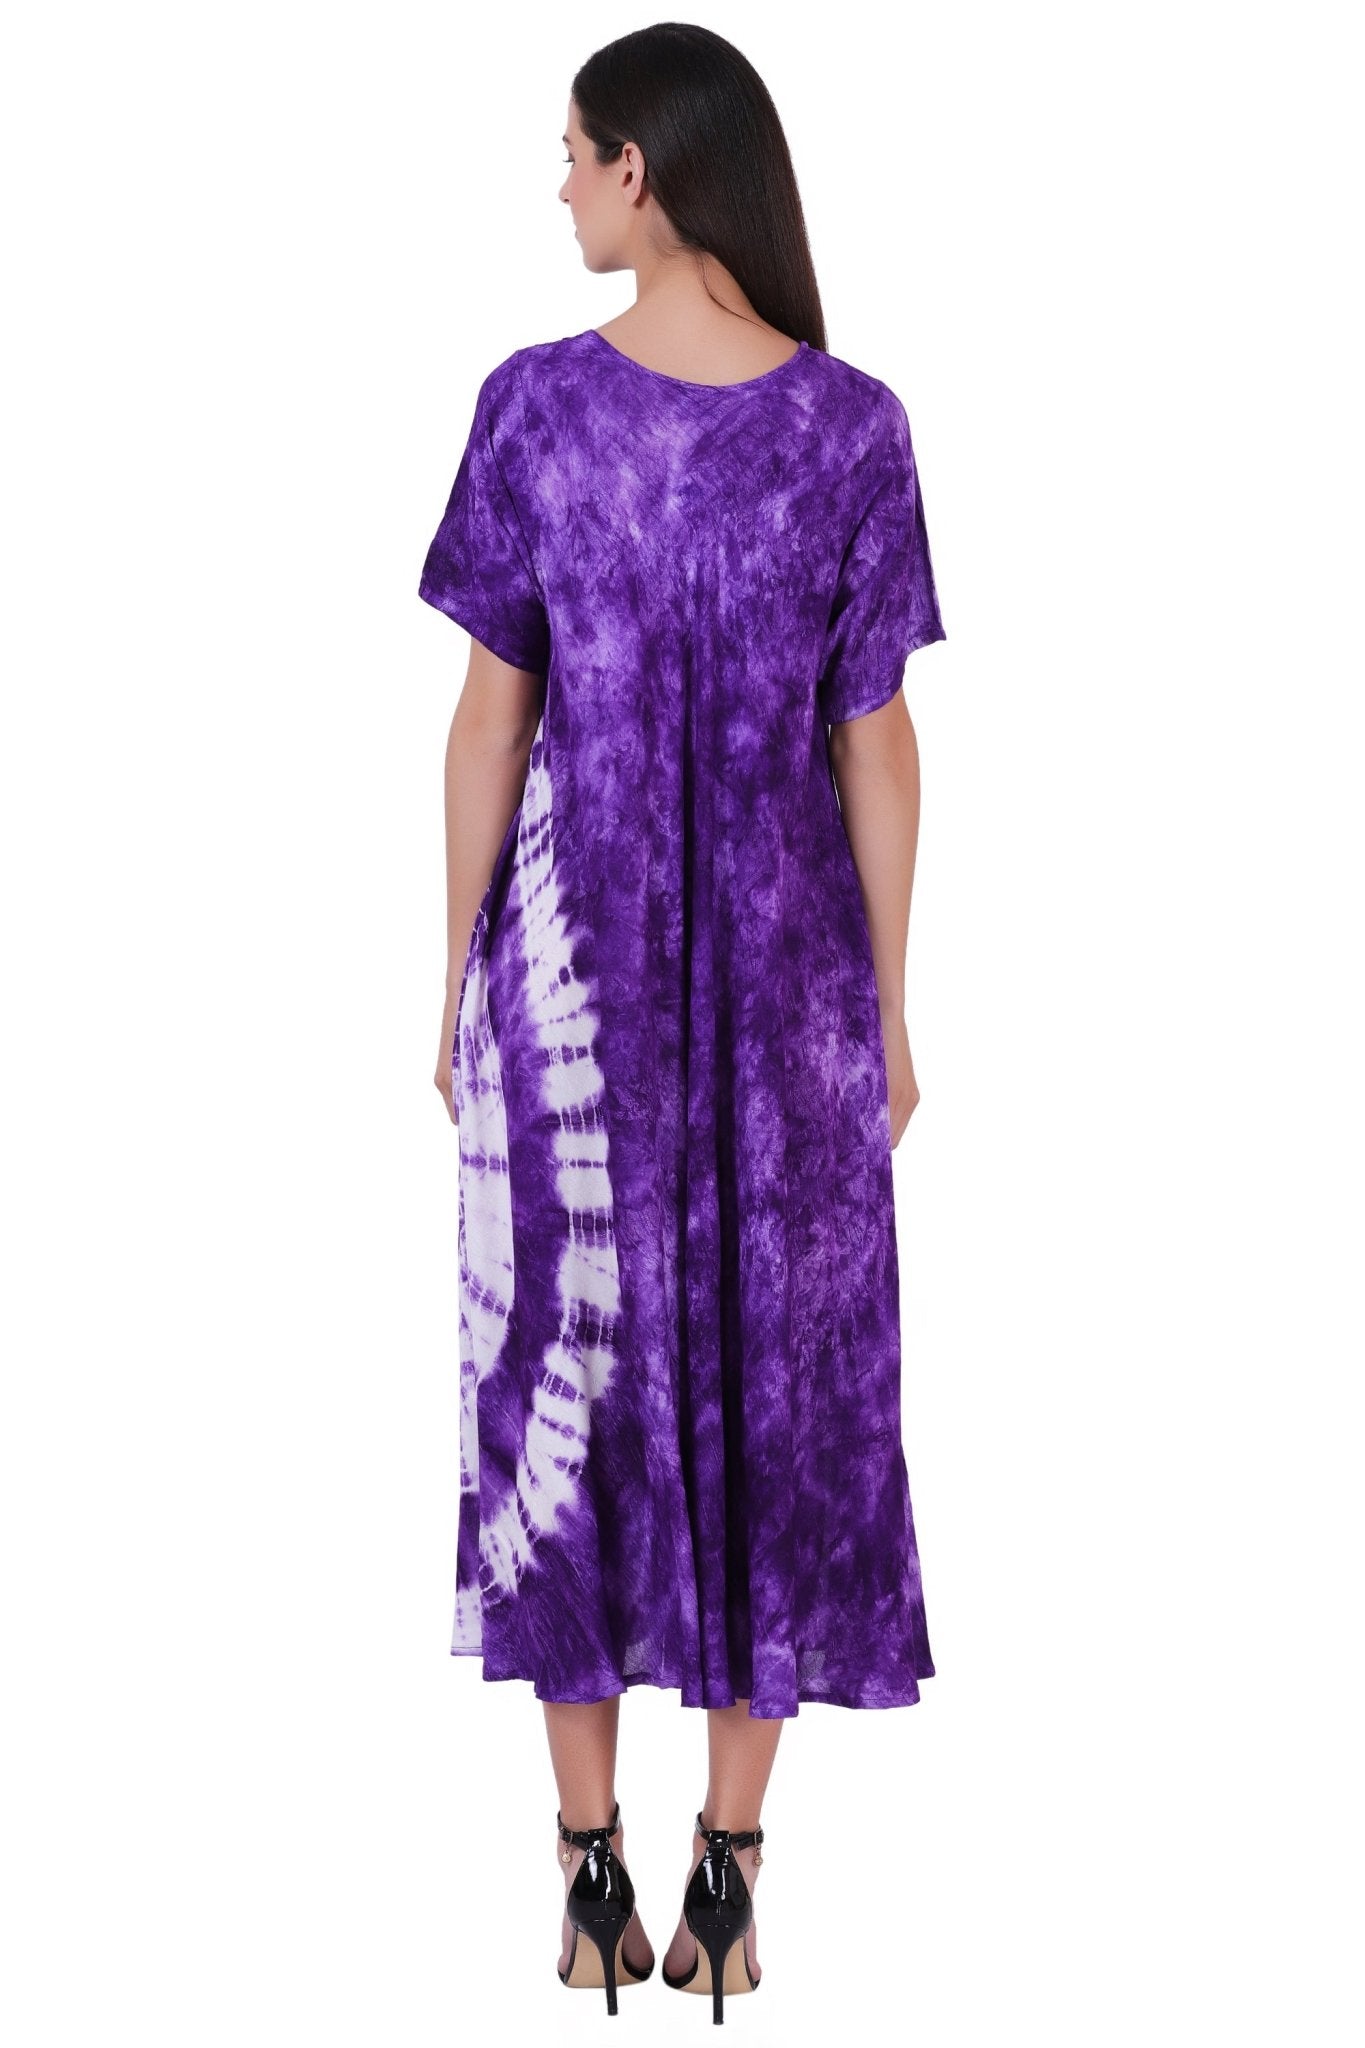 Capri Long Length Tie Dye Dress w/ Sleeves 522101 - Advance Apparels Inc